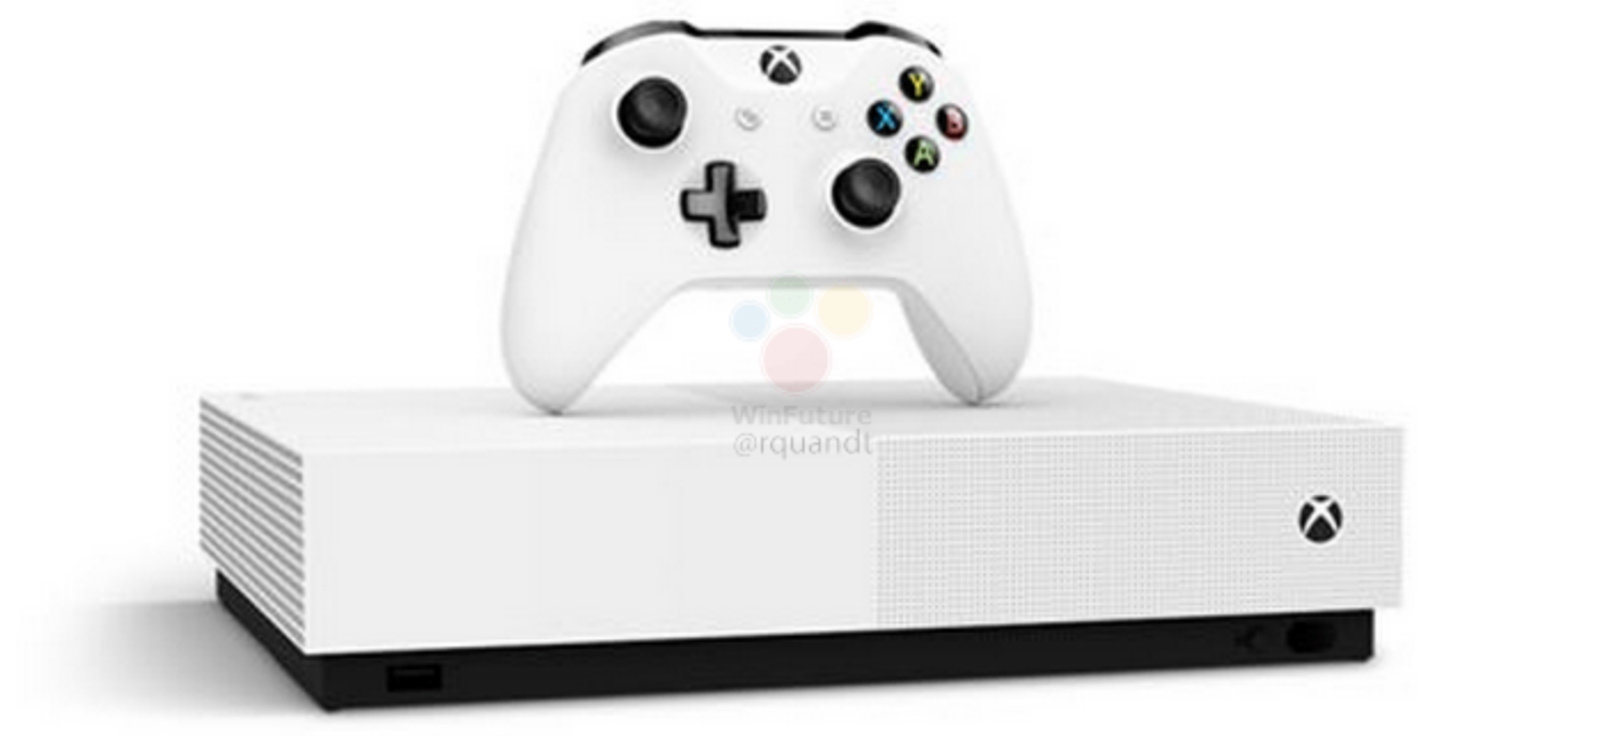 Leak shows Microsoft's 'All Digital' Xbox One S | DeviceDaily.com